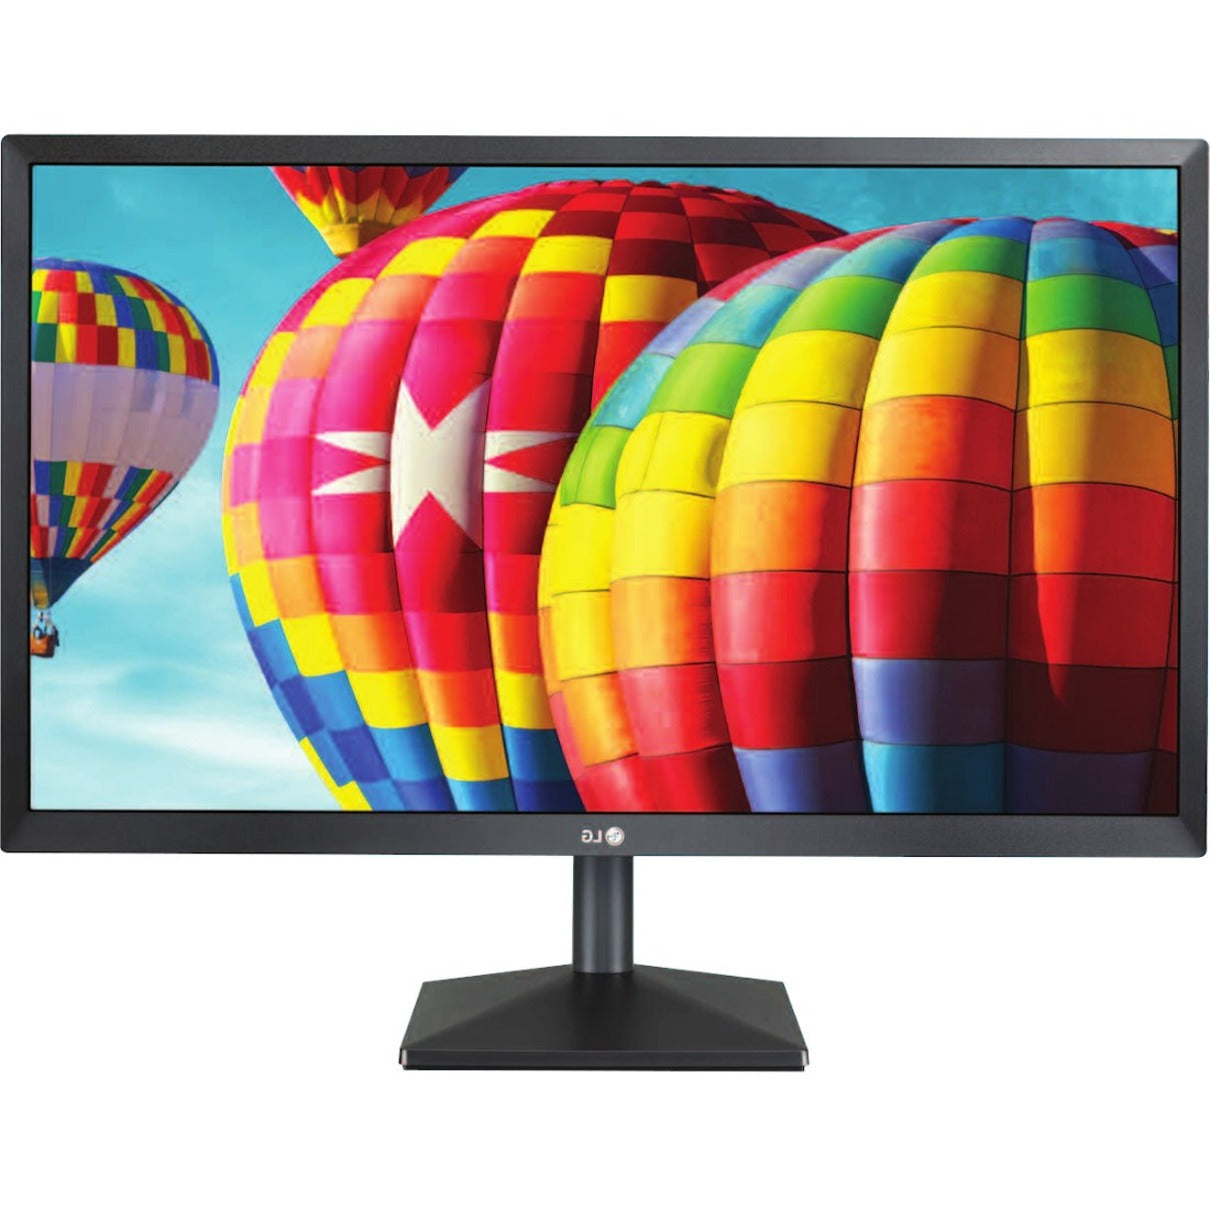 LG 27BK430H-B 27 Full HD LCD Monitor, Black - High Resolution, Vibrant Colors, Multiple Connectivity Options